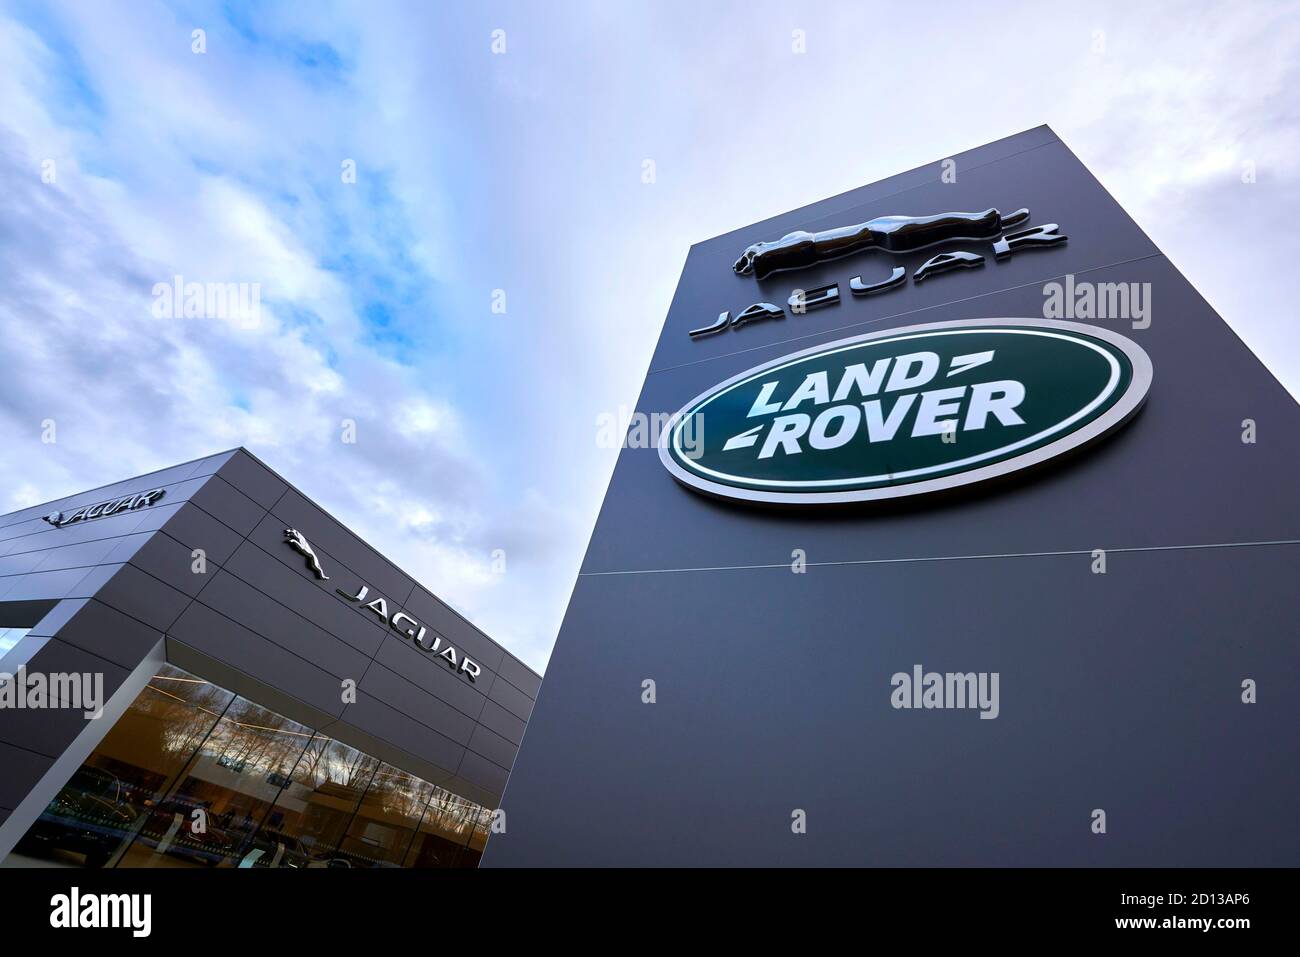 Jaguar Land rover logo at a  dealership, Boston, eastern England,UK Stock Photo